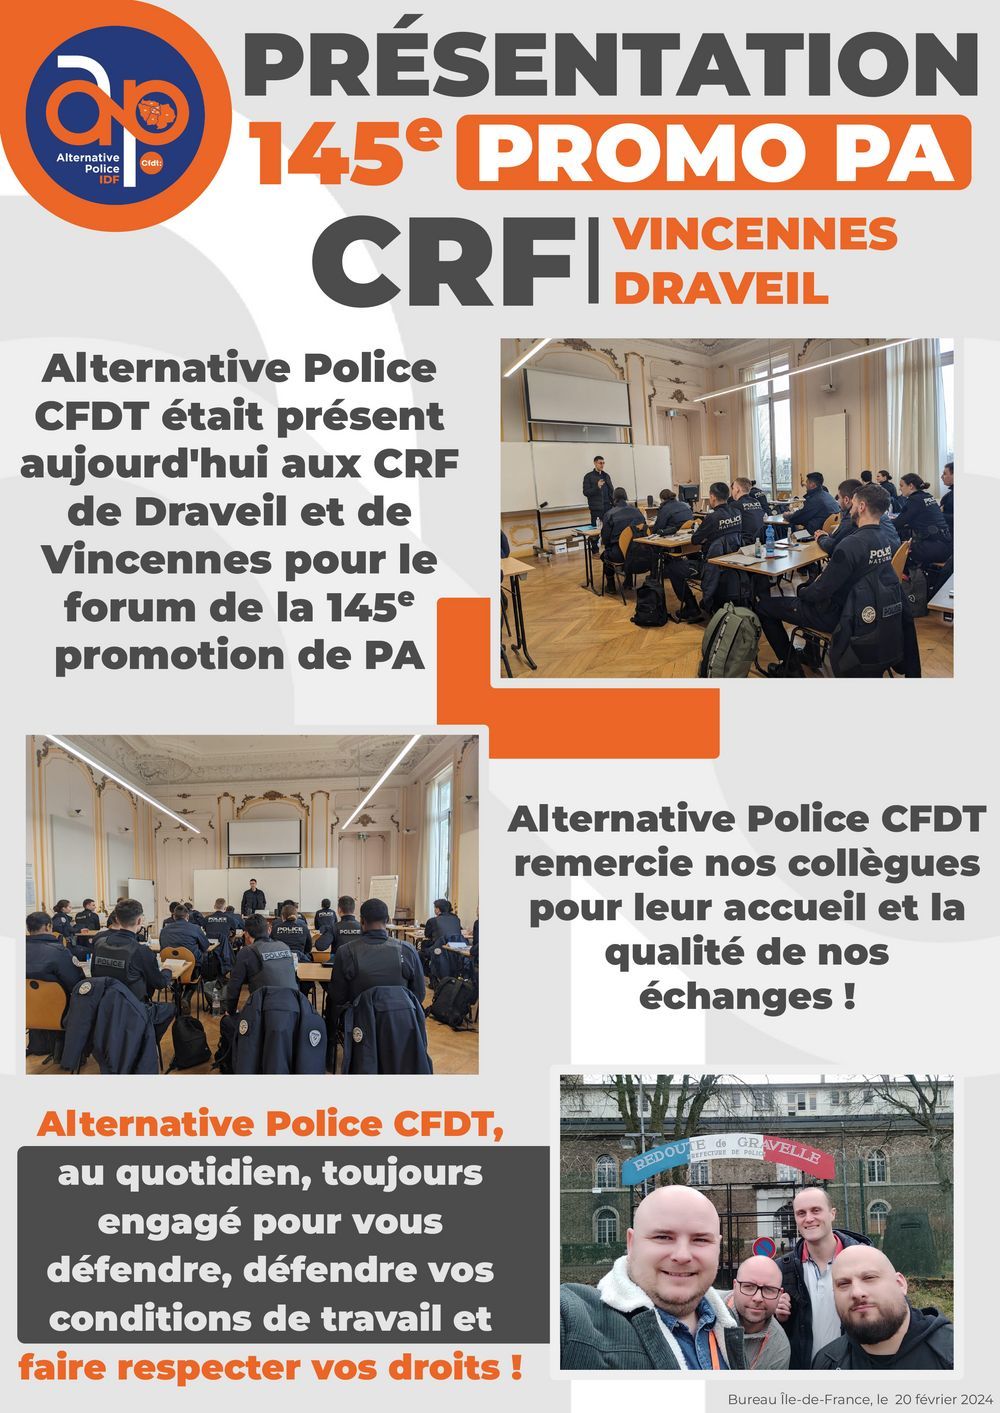 Présentation Alternative Police CFDT : 145e promotion de PA